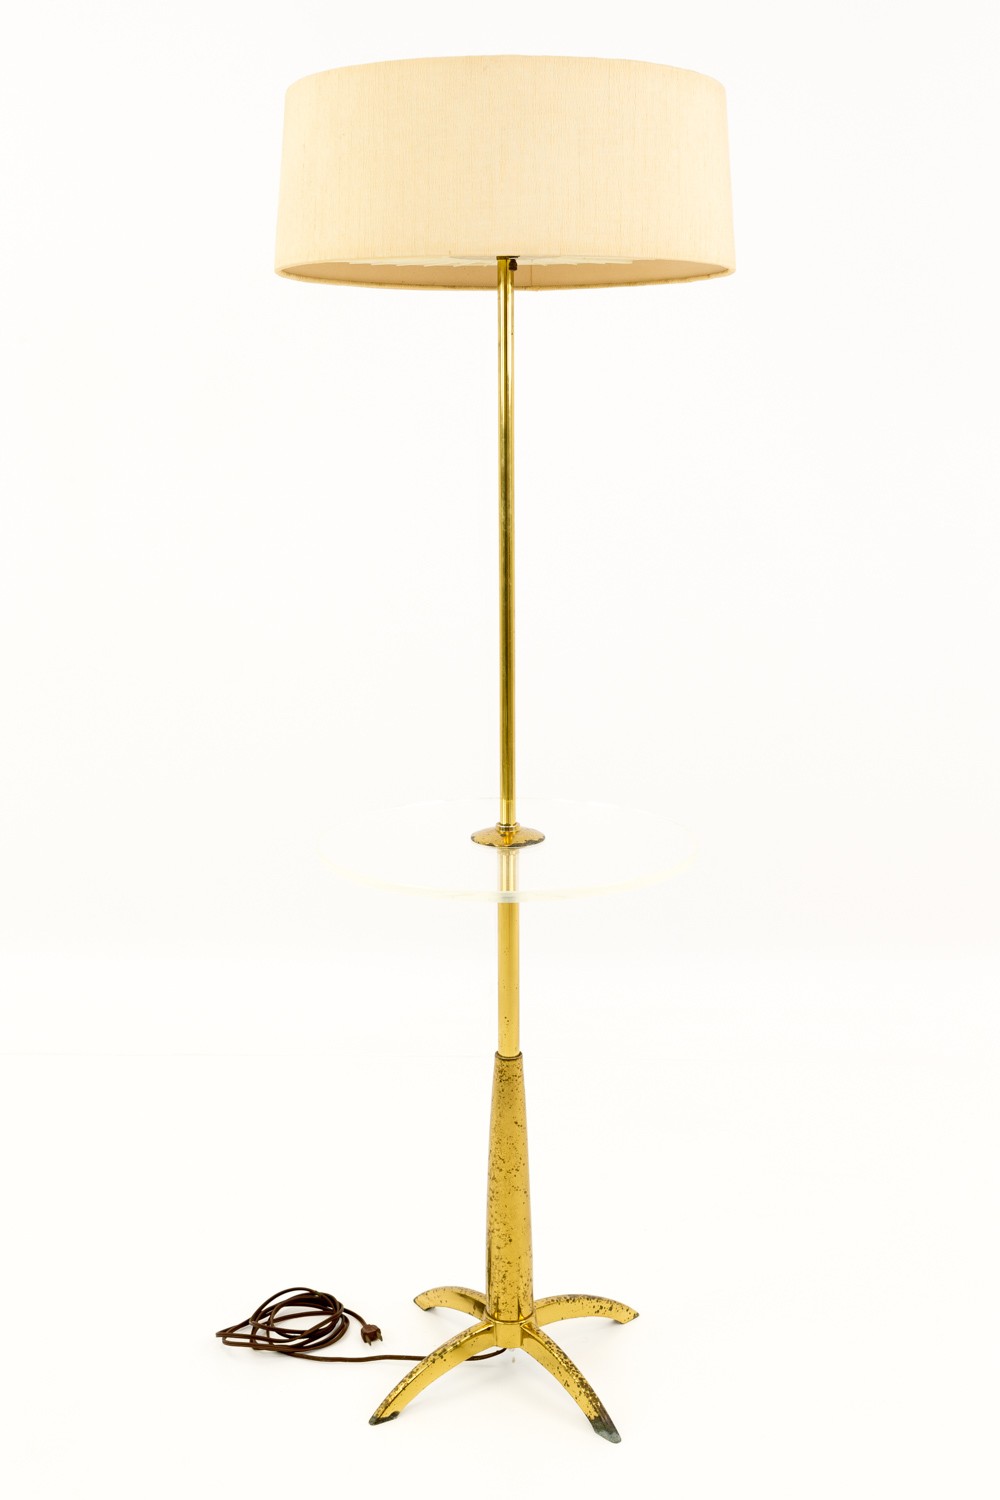 Gerald Thurston for Lightolier Mid Century Brass and Lucite Rocket Floor Lamp